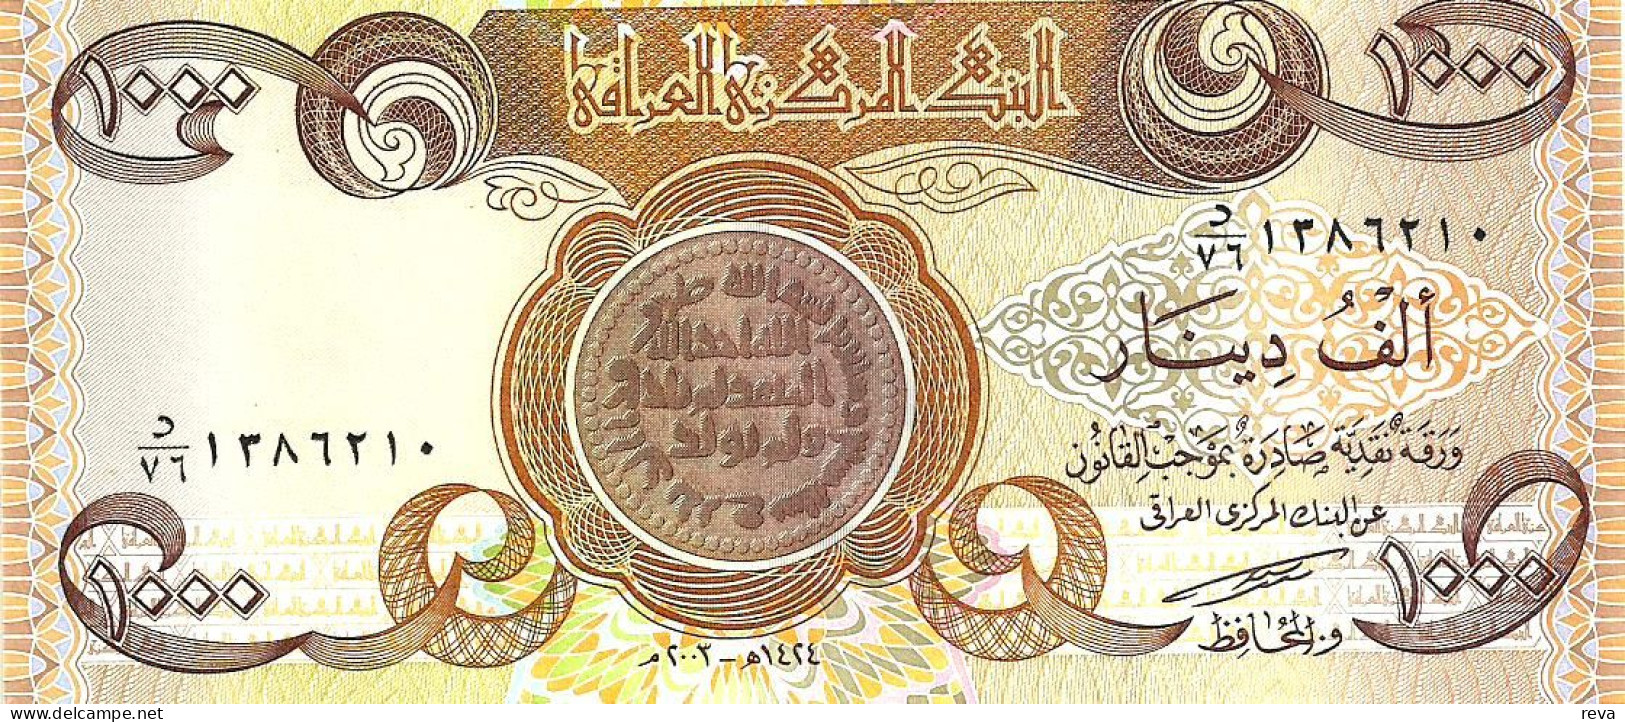 IRAQ 1000 DINARS BROWN ANCIENT COIN FRONT& BUILDING BACK  DATED 2004-1424(?) UNC P.?  READ DESCRIPTION !! - Irak